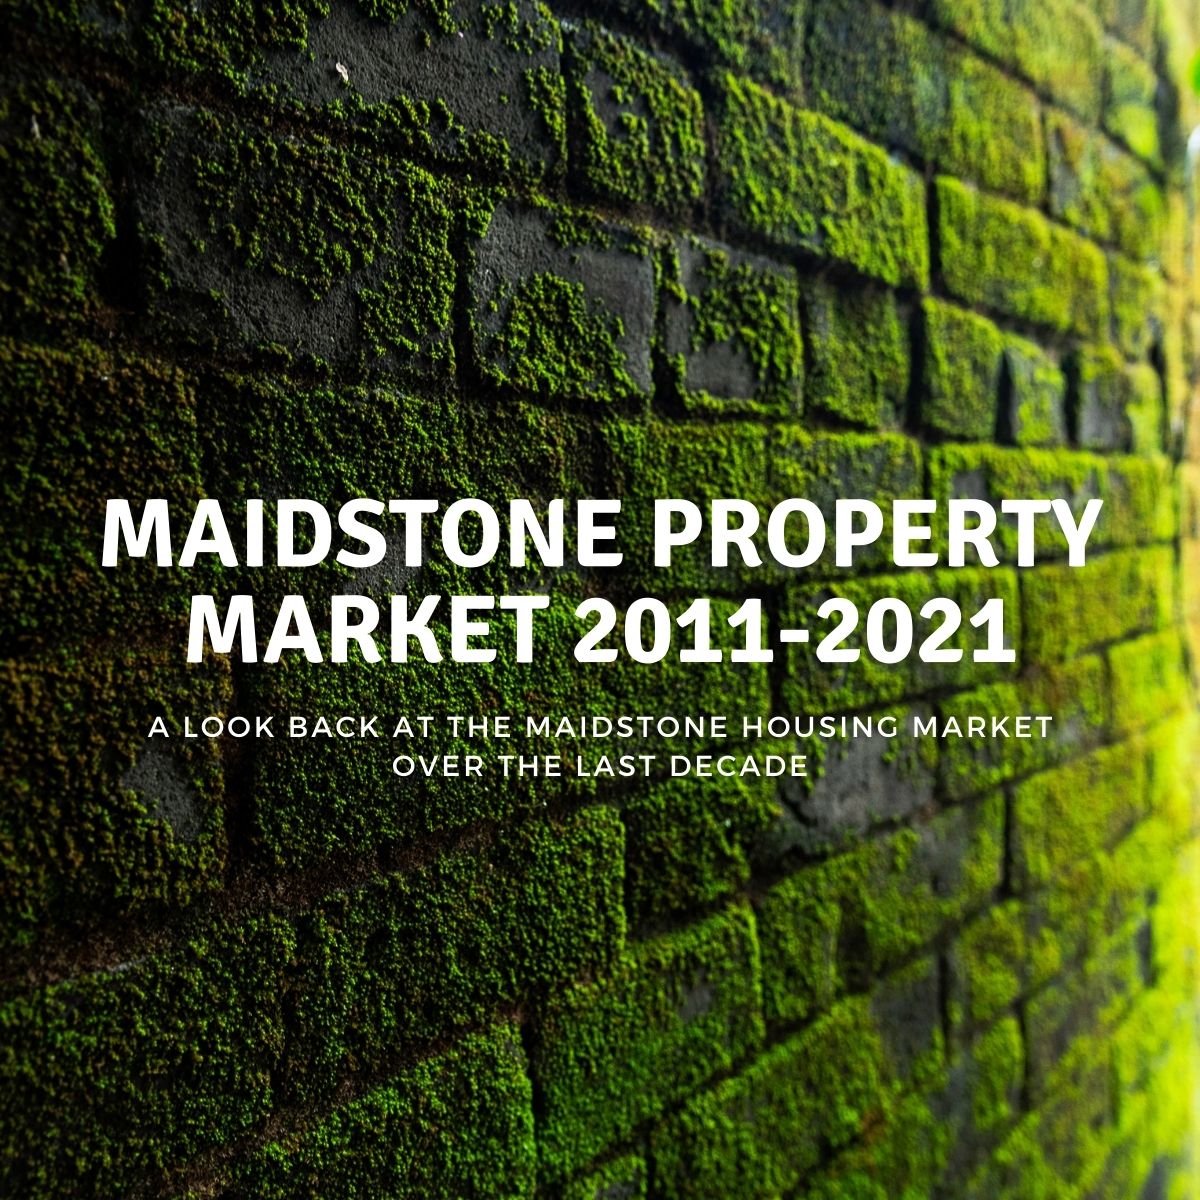 Maidstone Property Market: 2011-2021